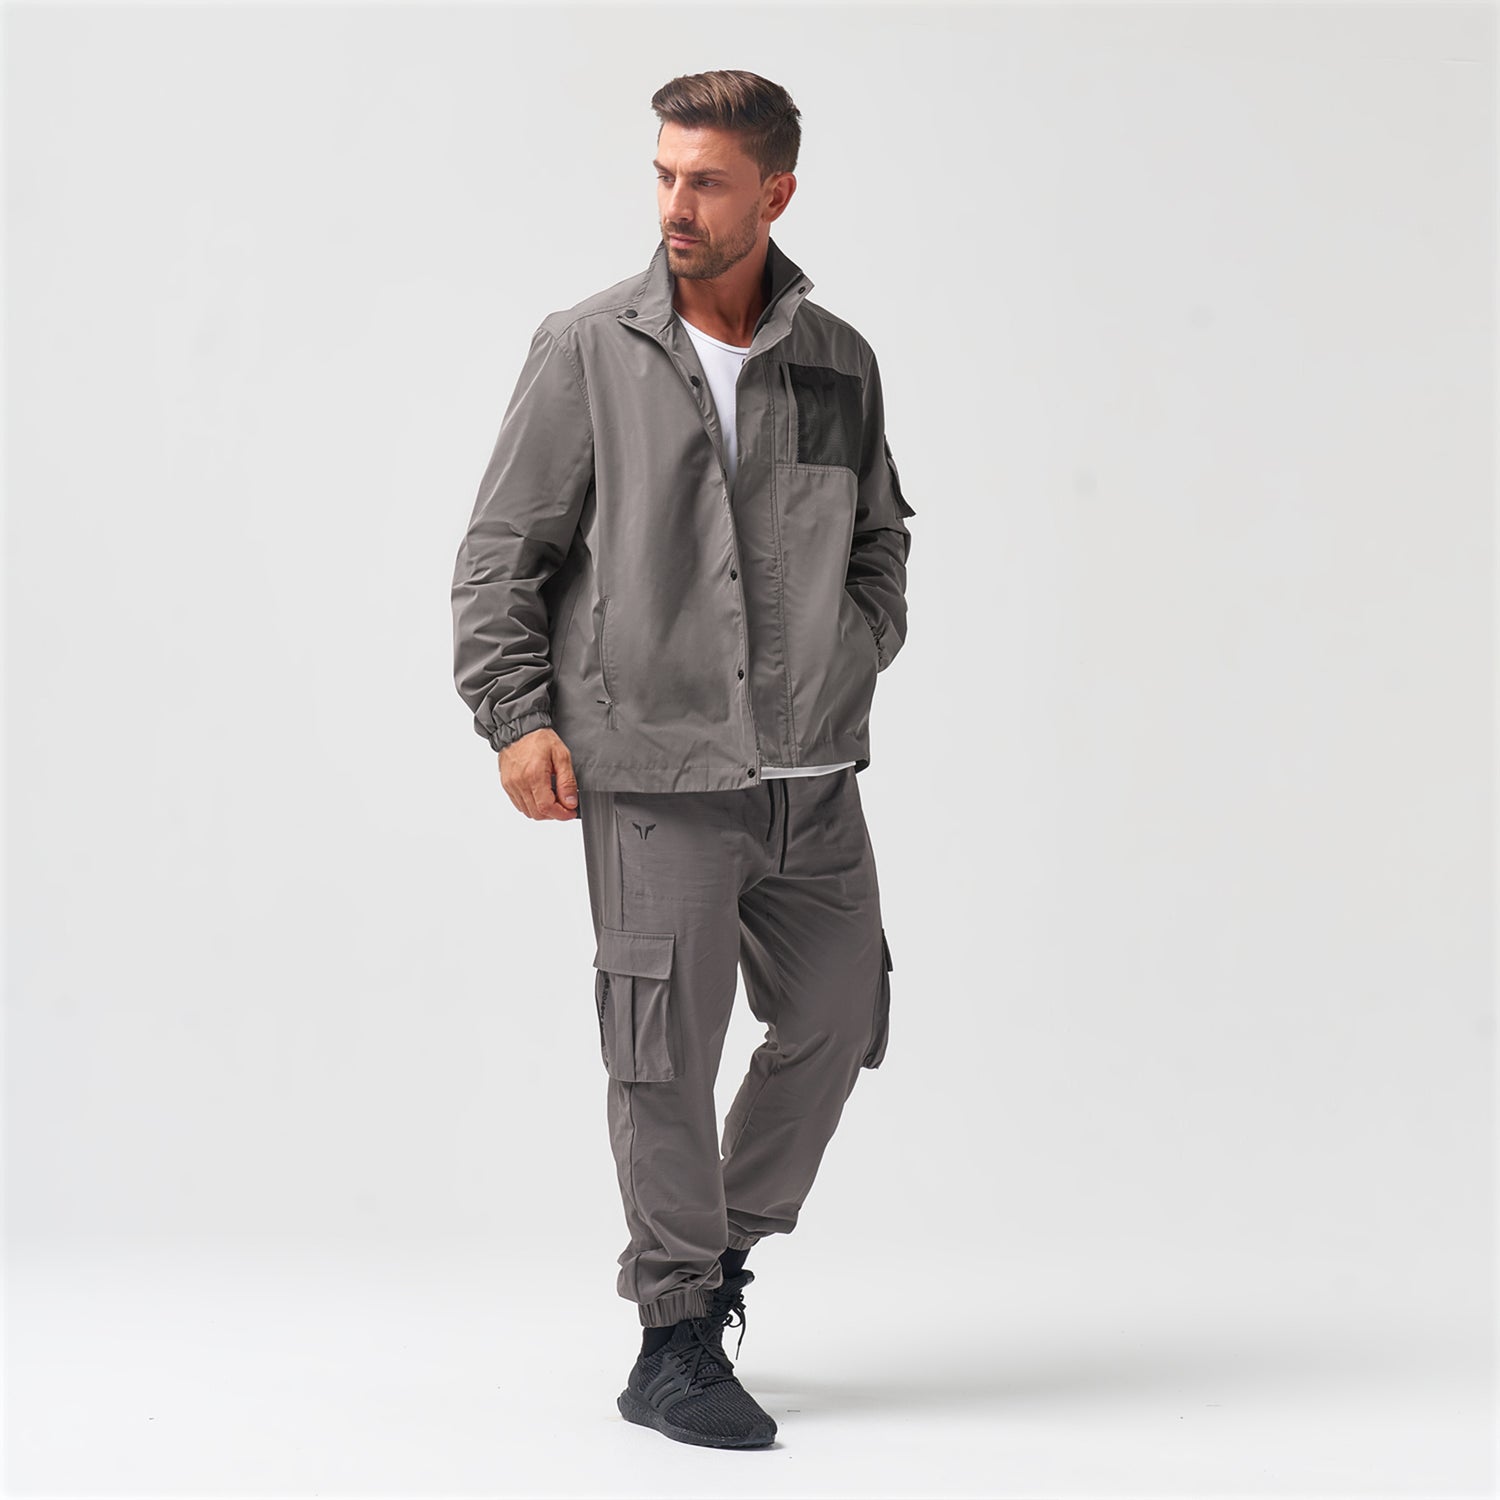 squatwolf-gym-wear-code-urban-jacket-grey-workout-top-for-men